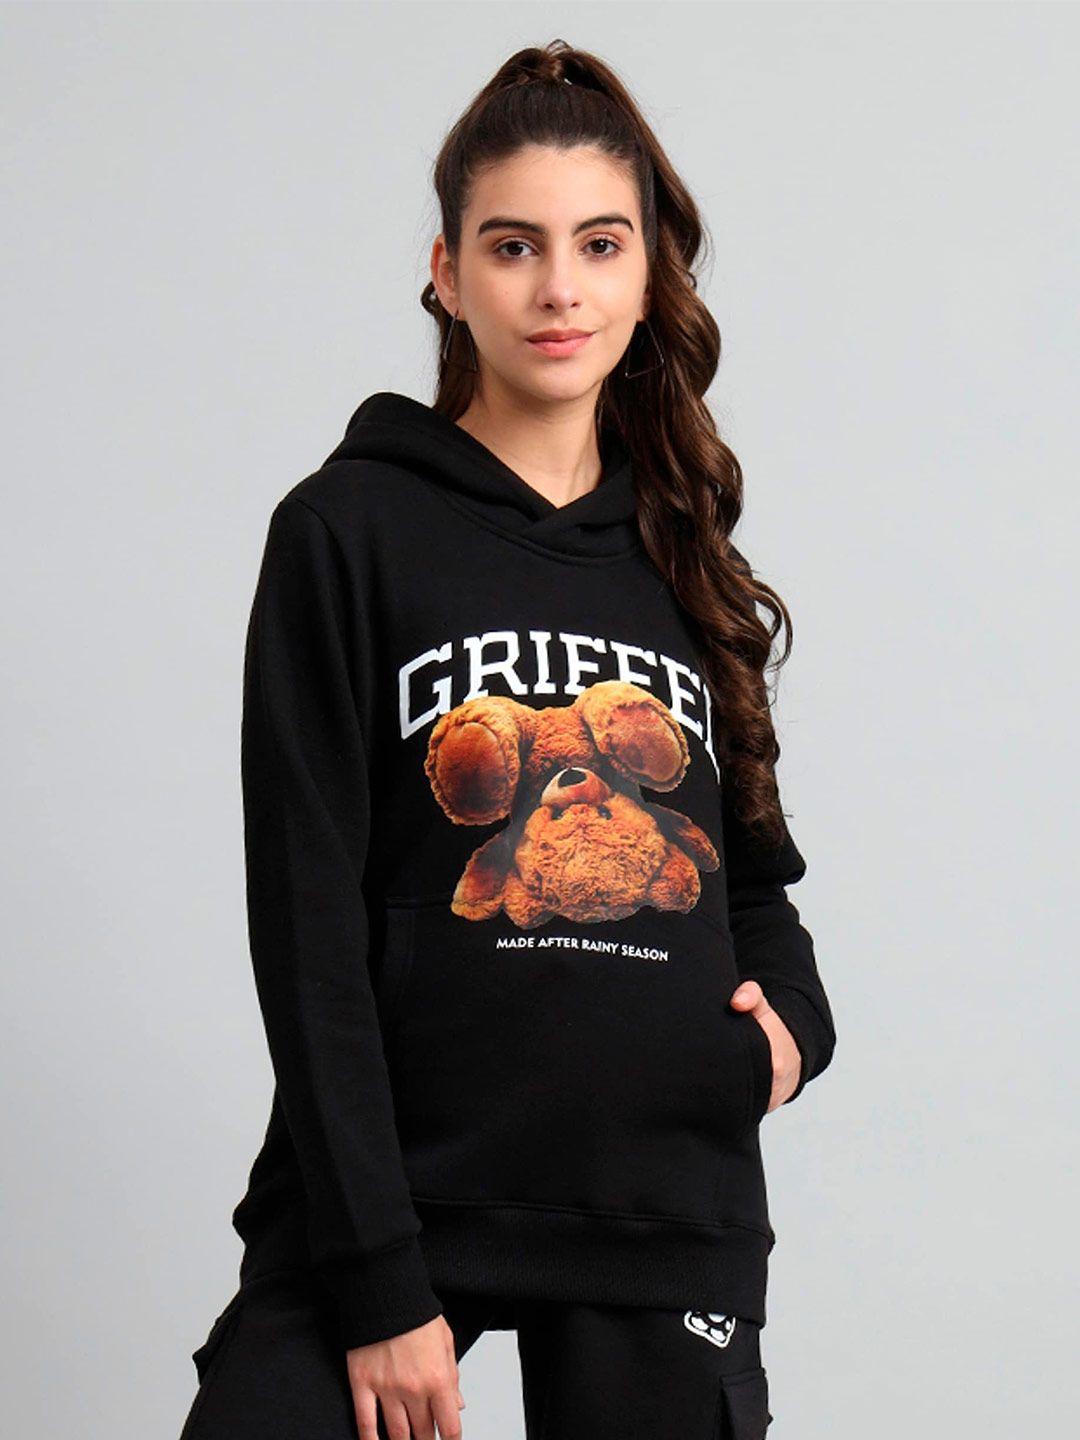 griffel graphic printed hooded fleece pullover sweatshirt